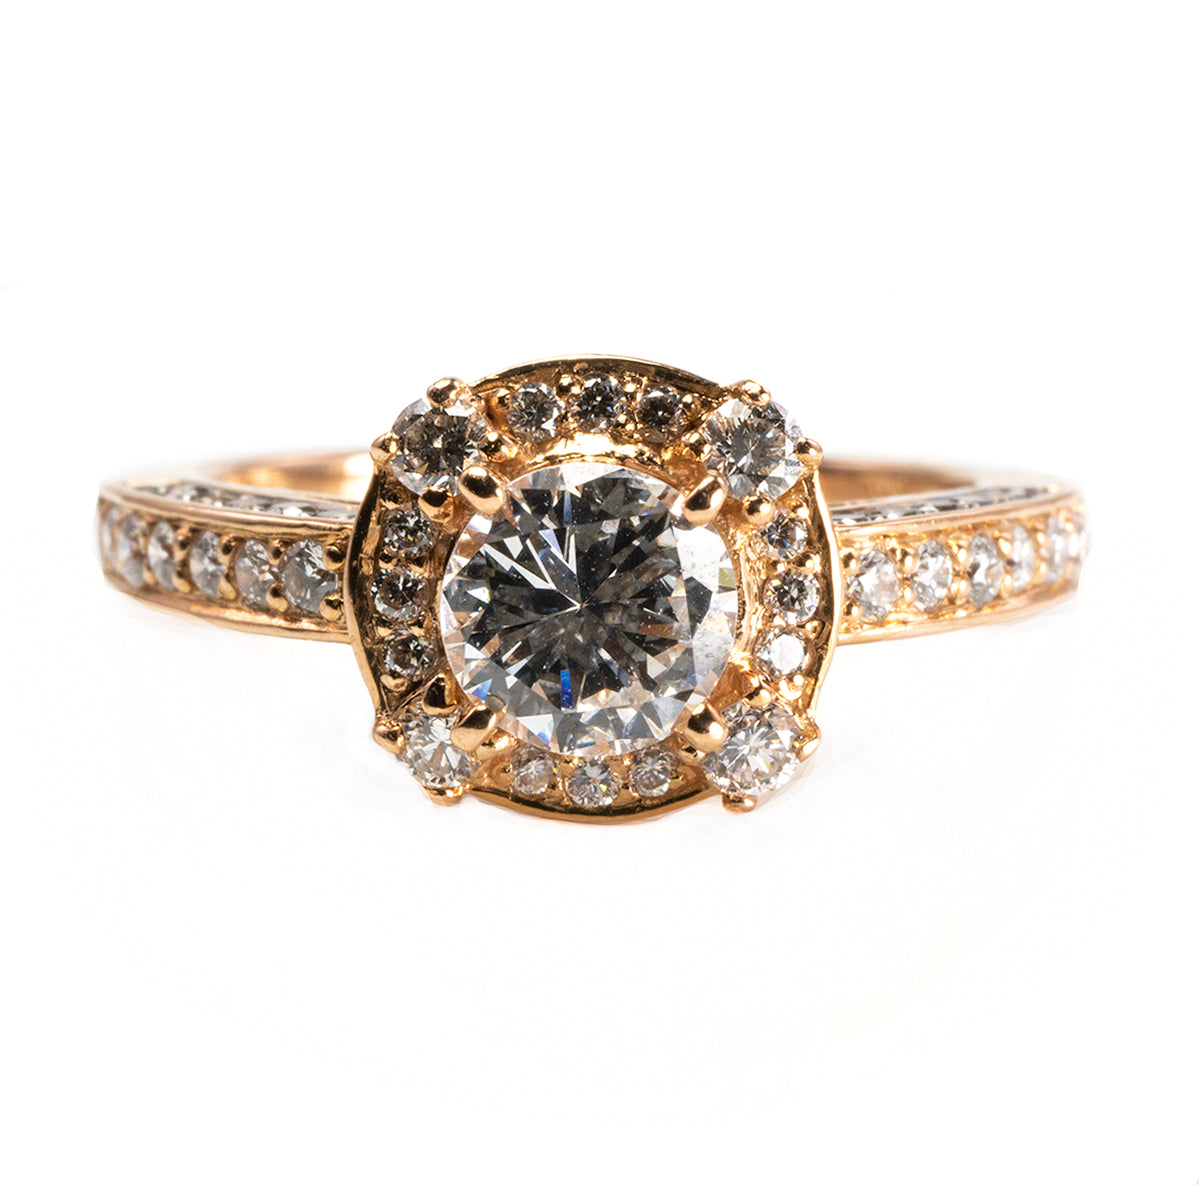 14 k Le Vian Rose Gold Diamond Ring